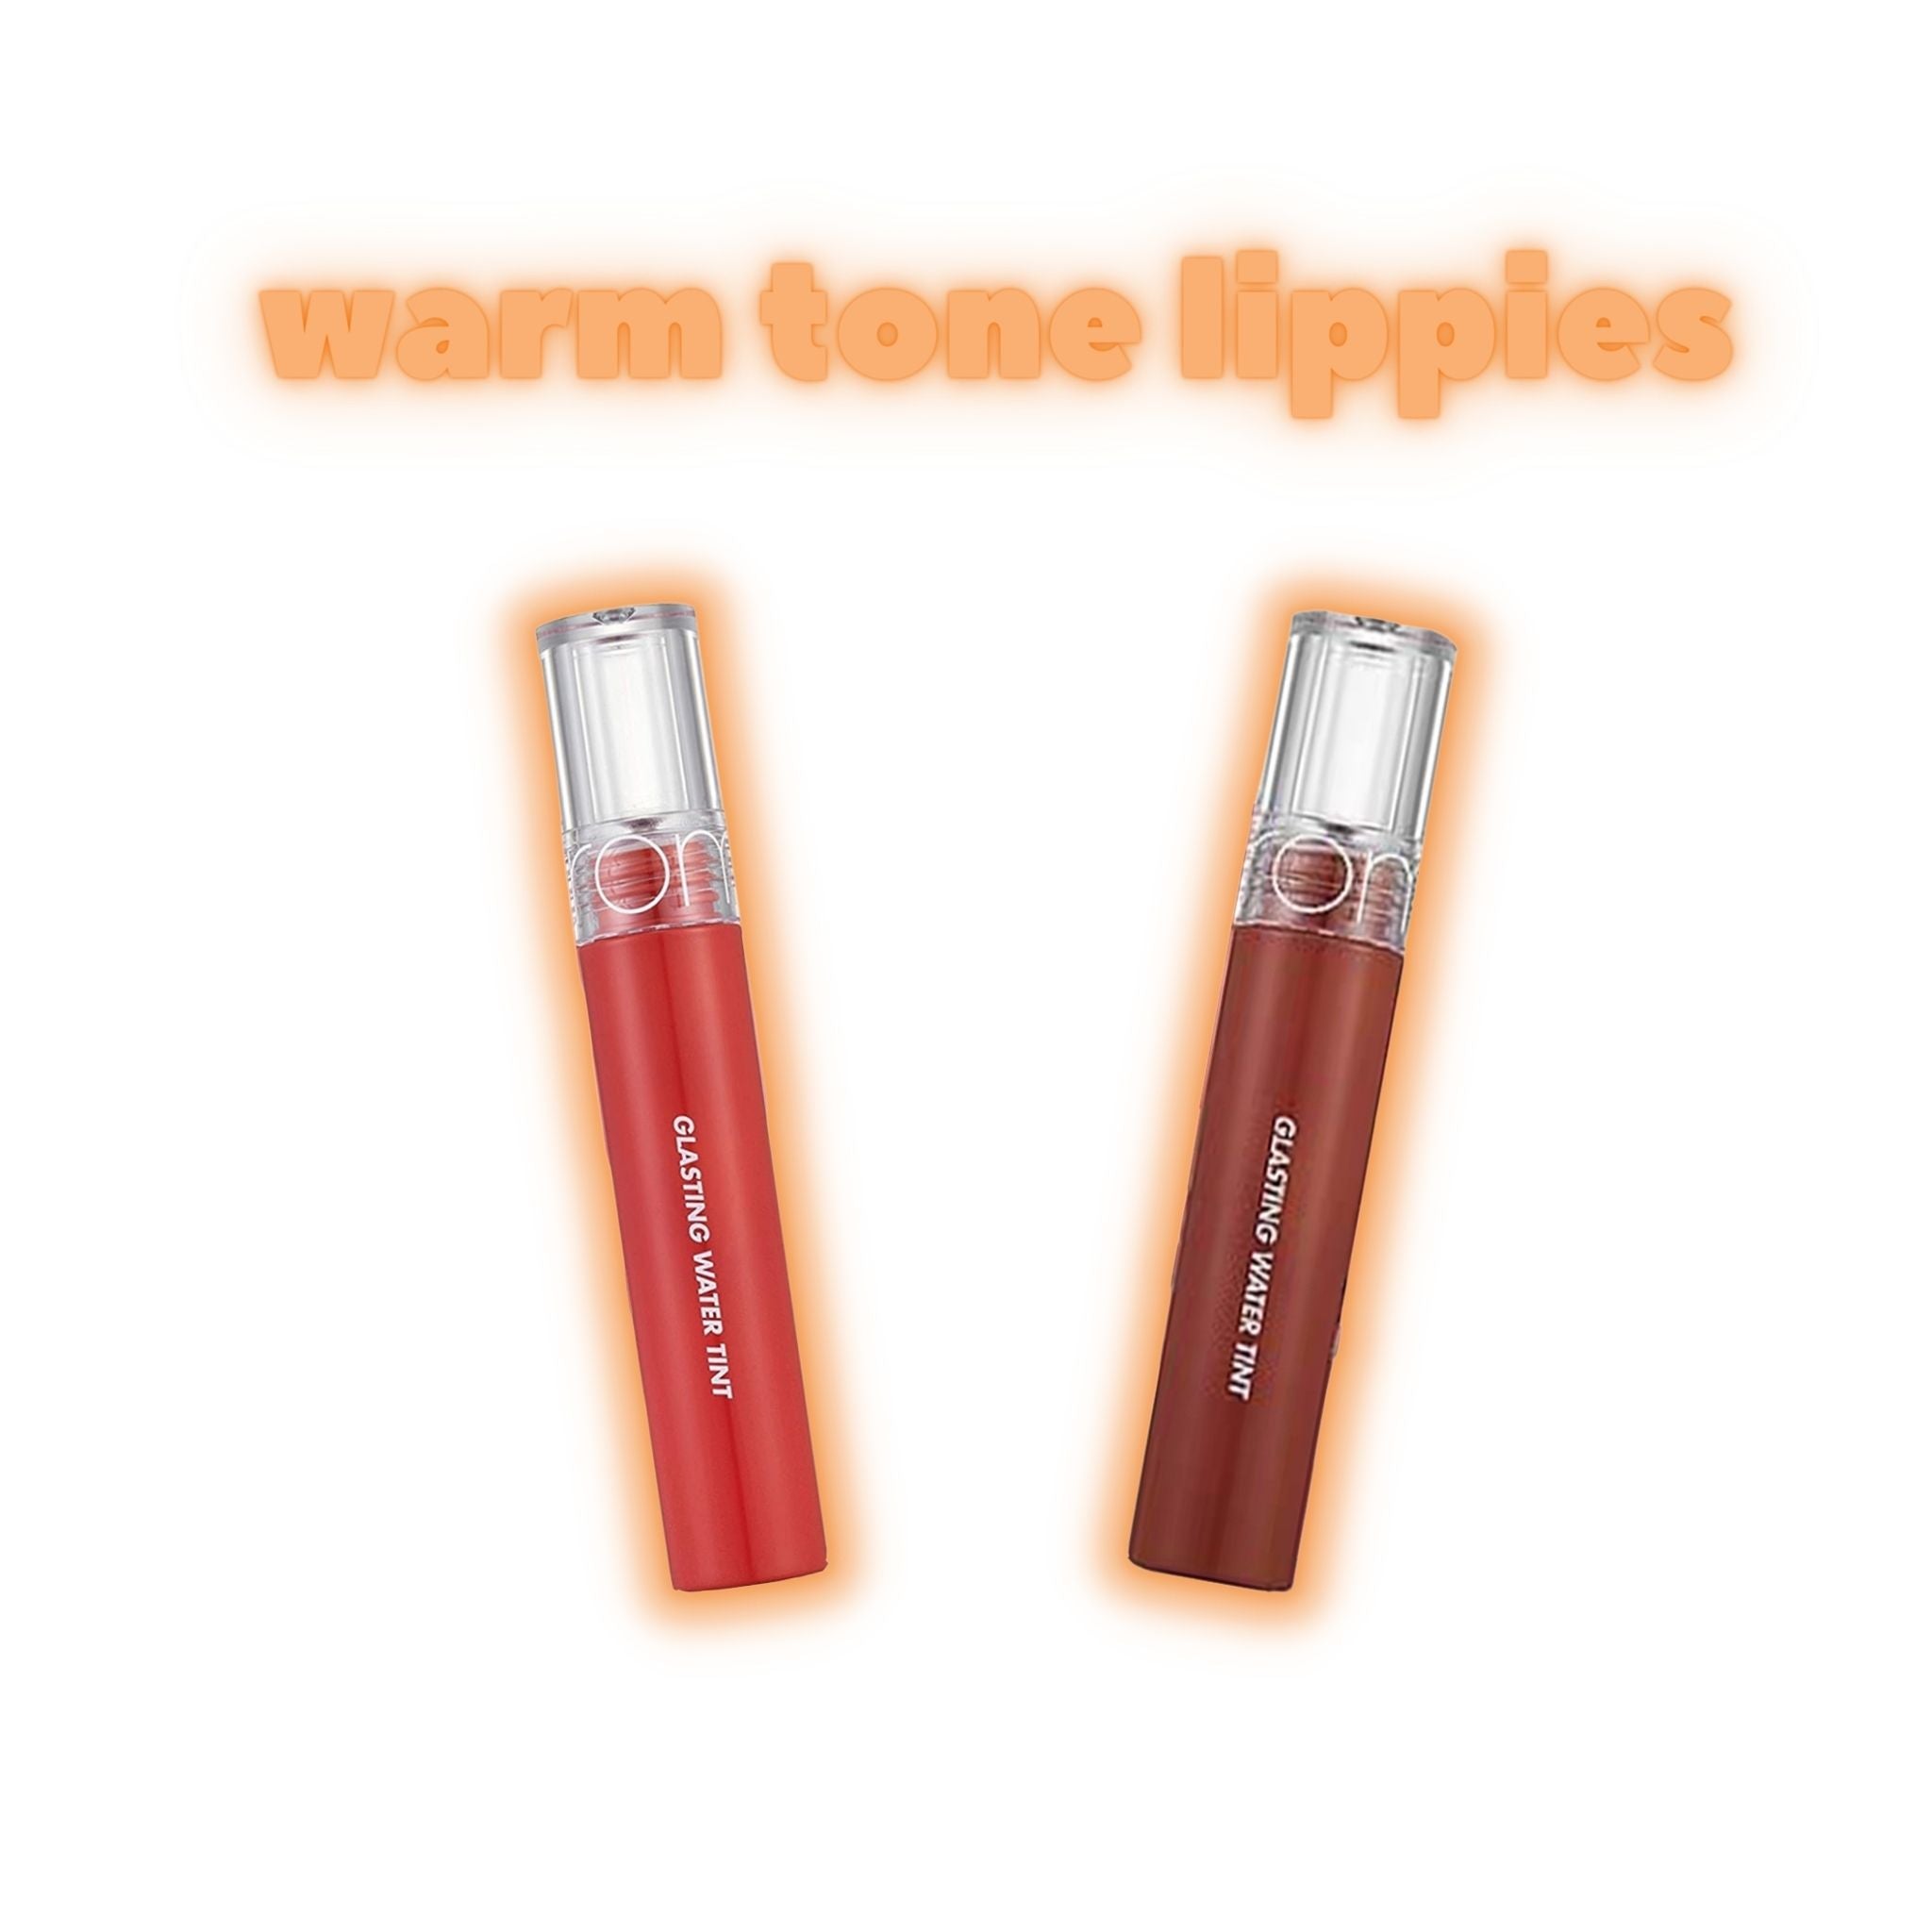 Warm-tone lippies (2PC)